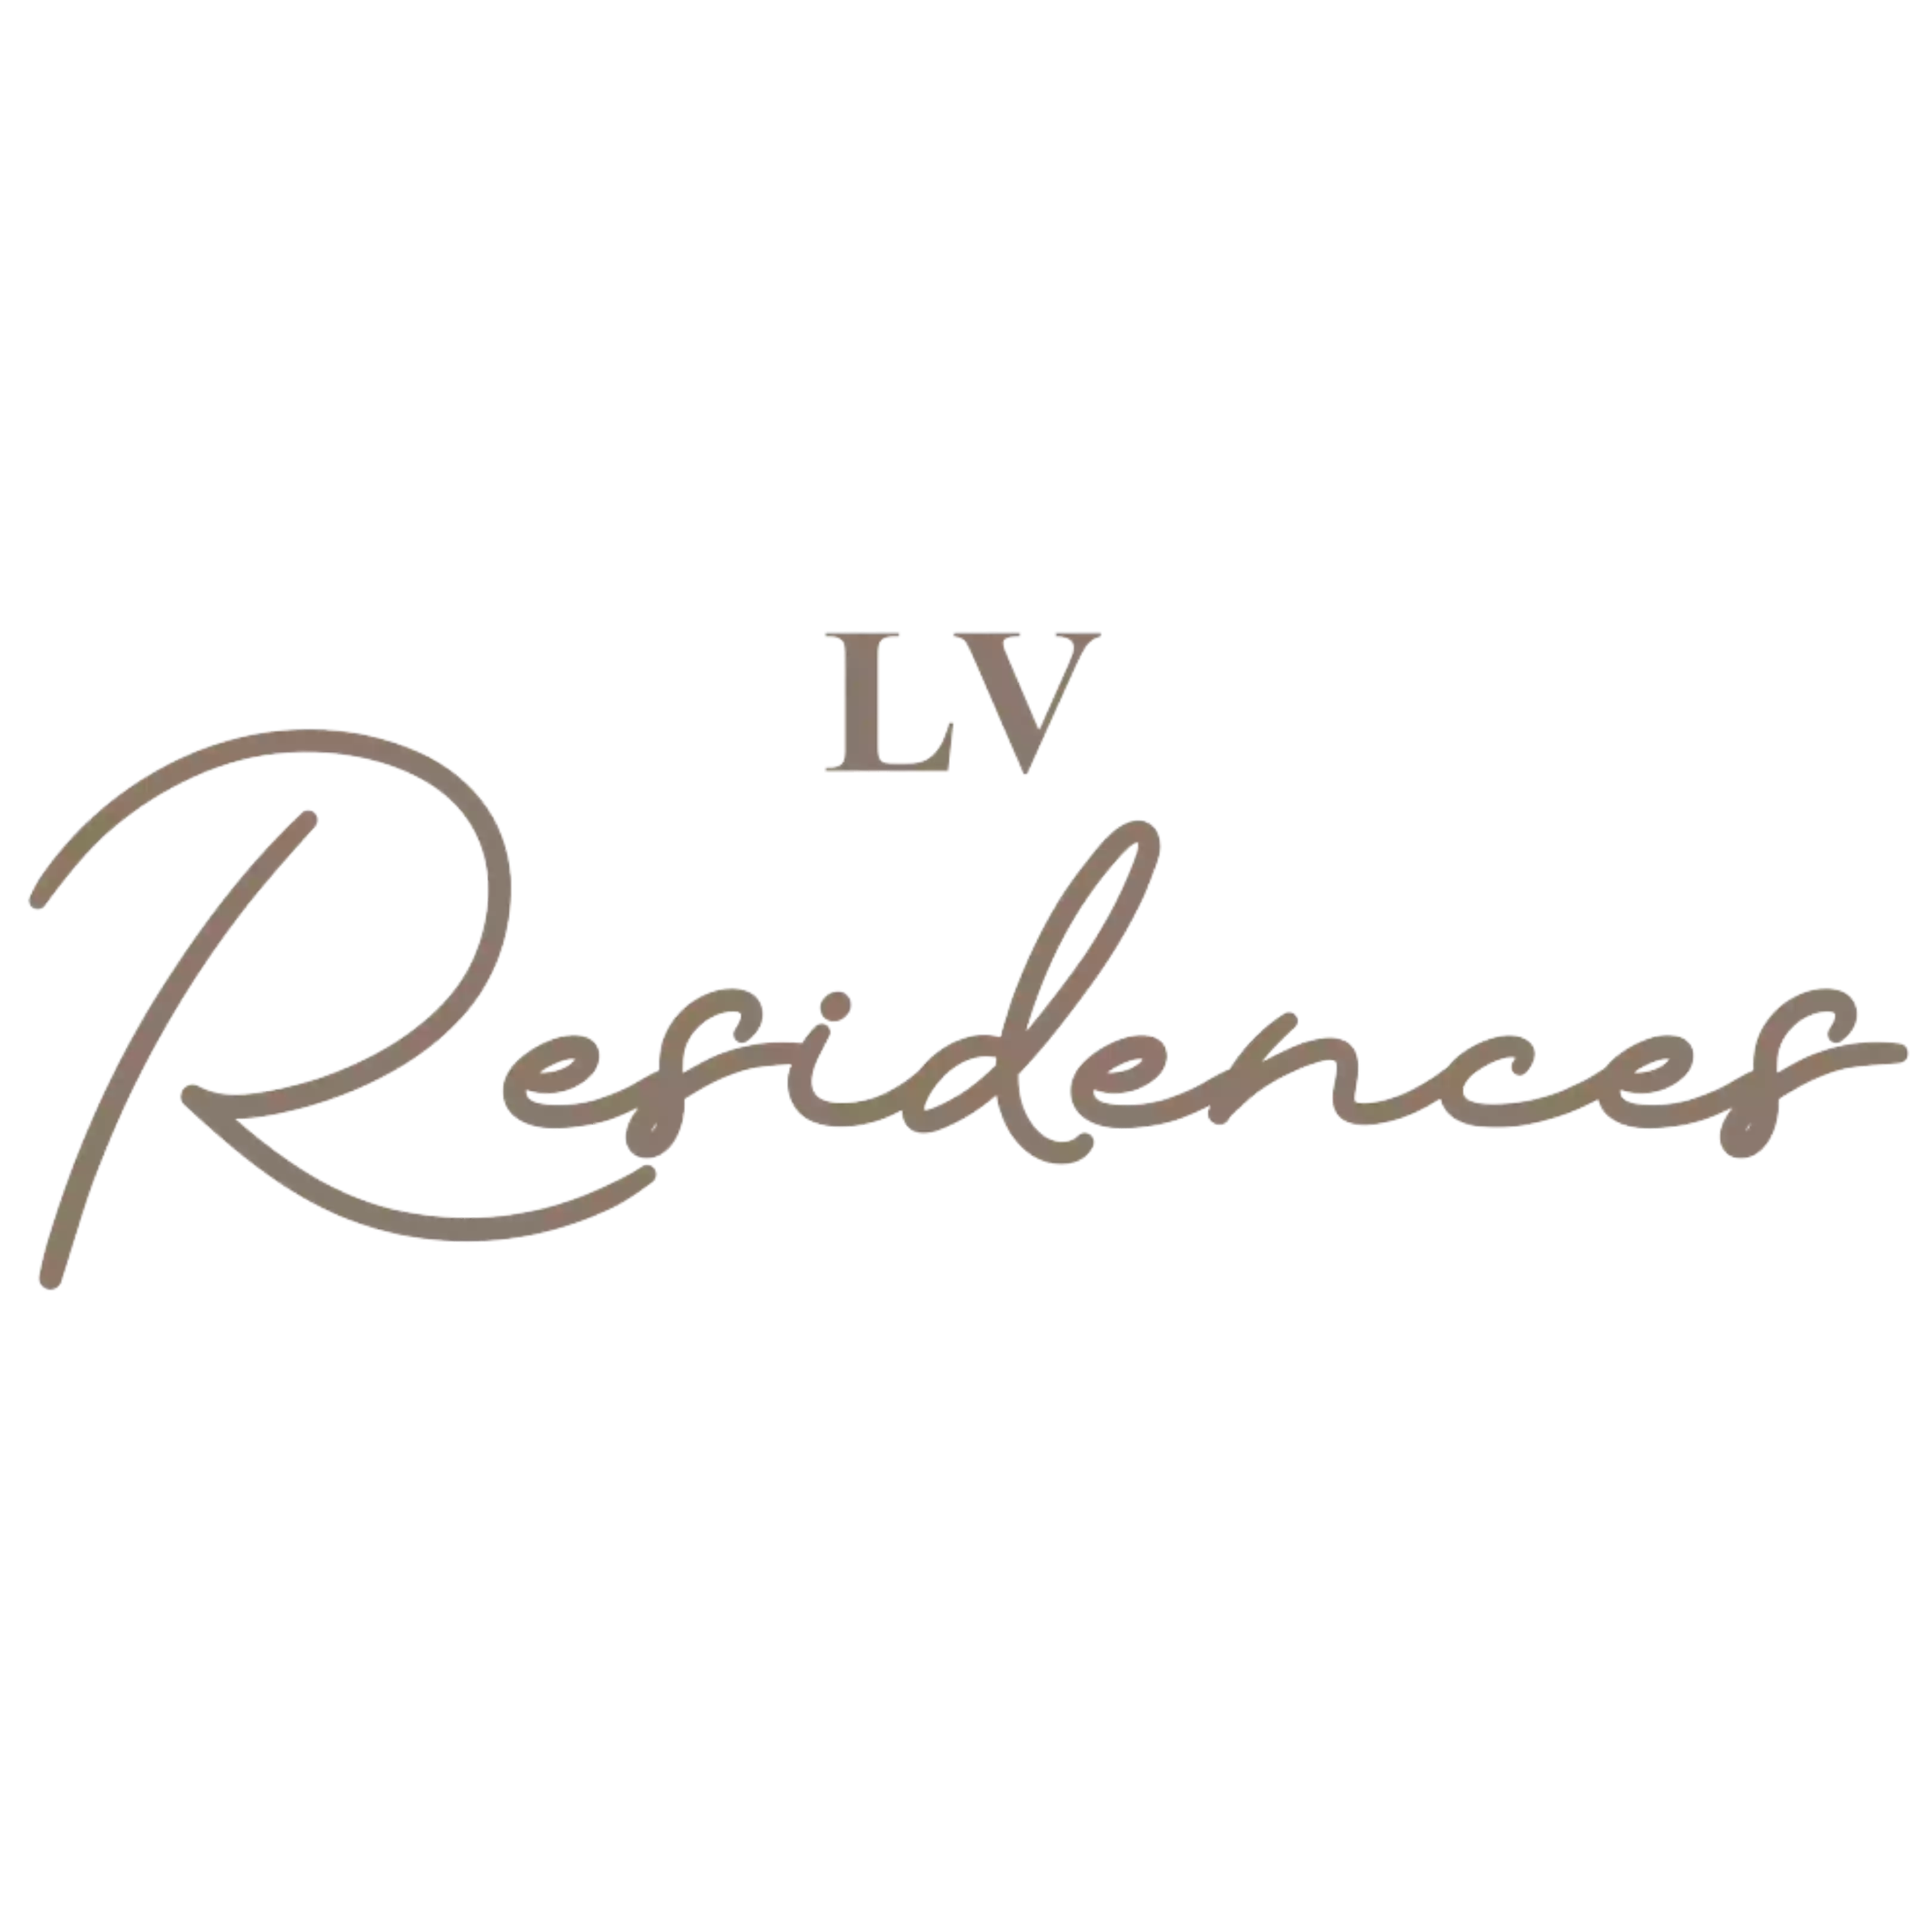 LV Residences Signac